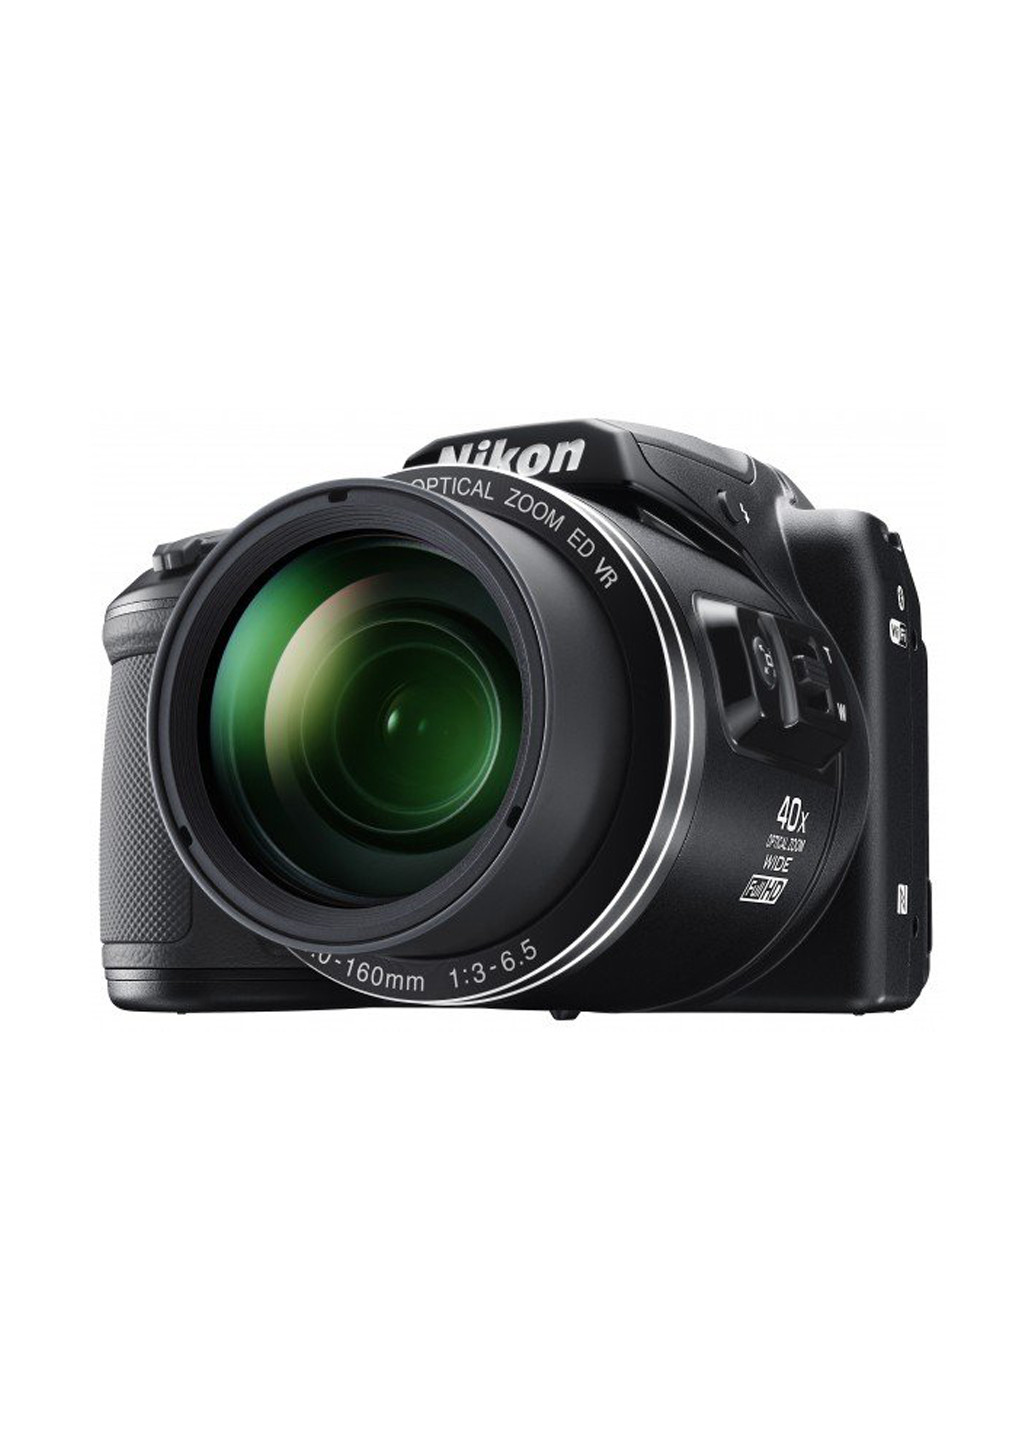 Компактная фотокамера Nikon coolpix b500 black (132999709)